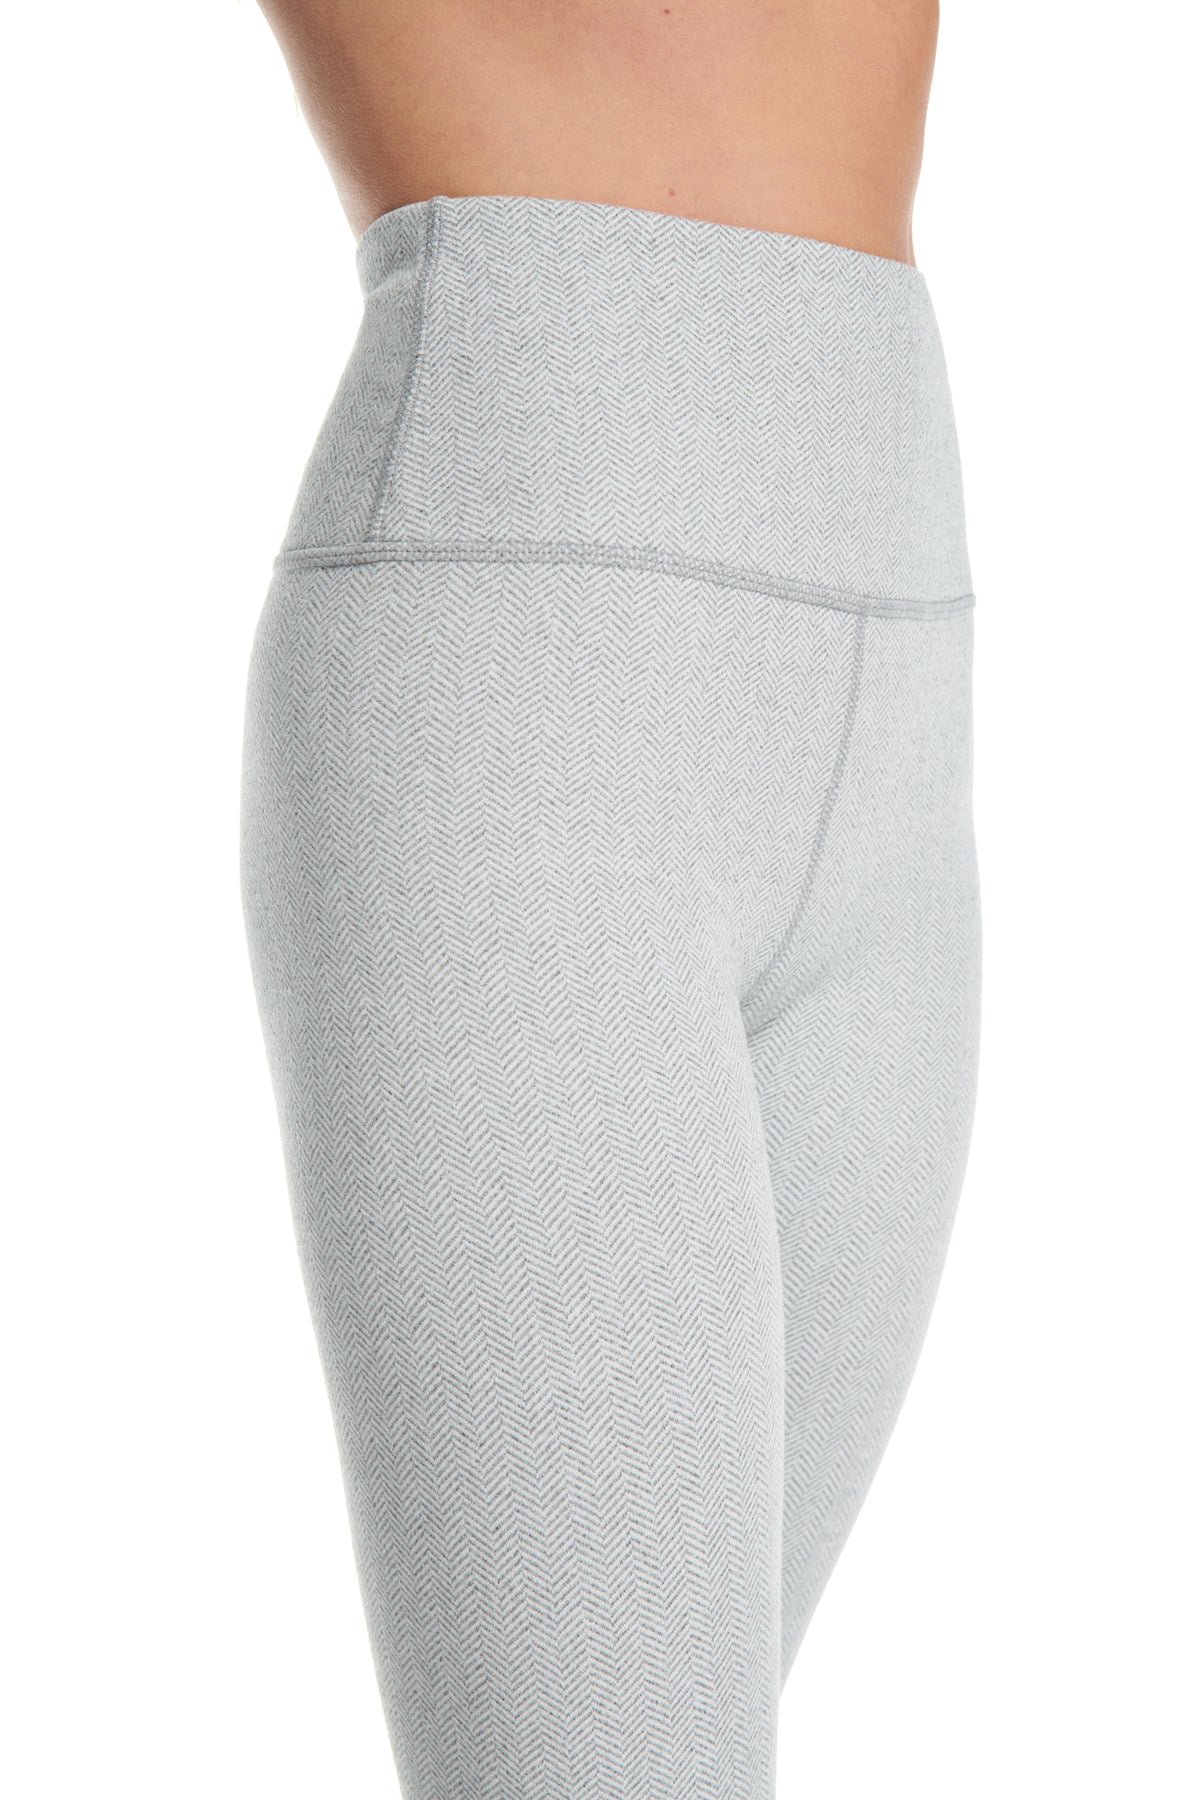 Organic Cotton Herringbone Leggings Light Color Leggings Grey and White  Patterned Leggings -  Canada